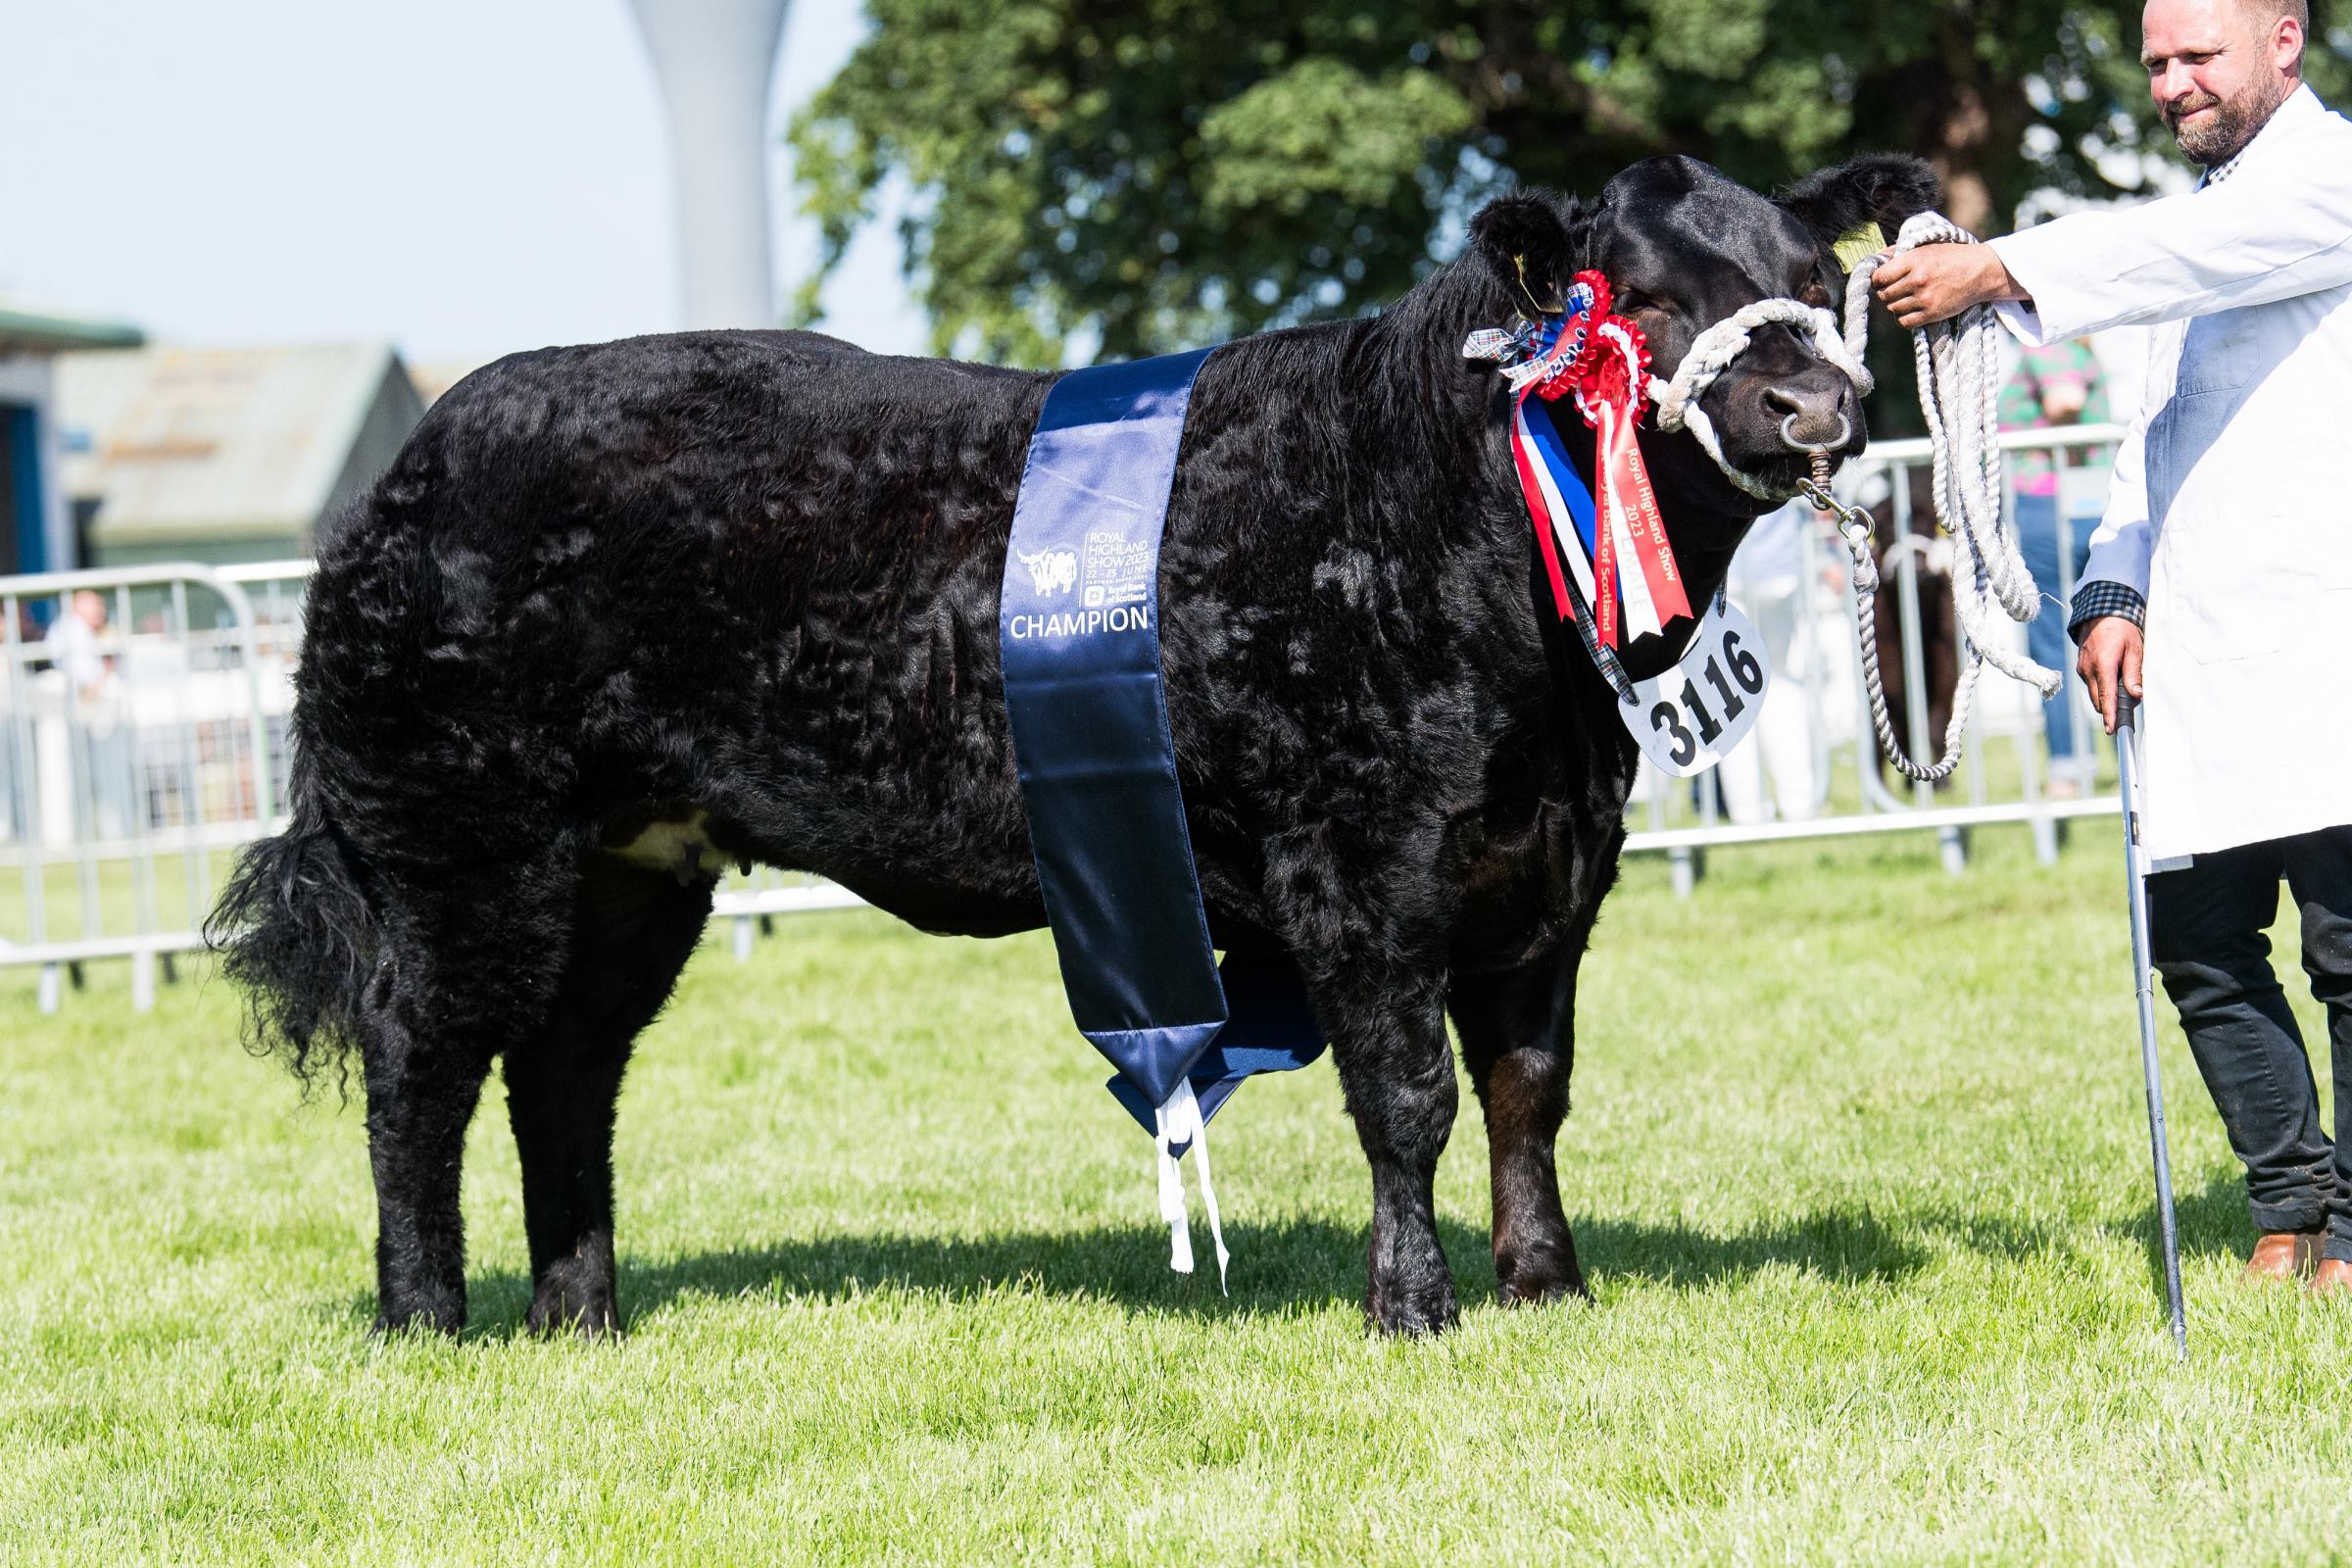 Commercial cattle champion from James Nisbet Ref:RH220623080 Rob Haining / The Scottish Farmer...